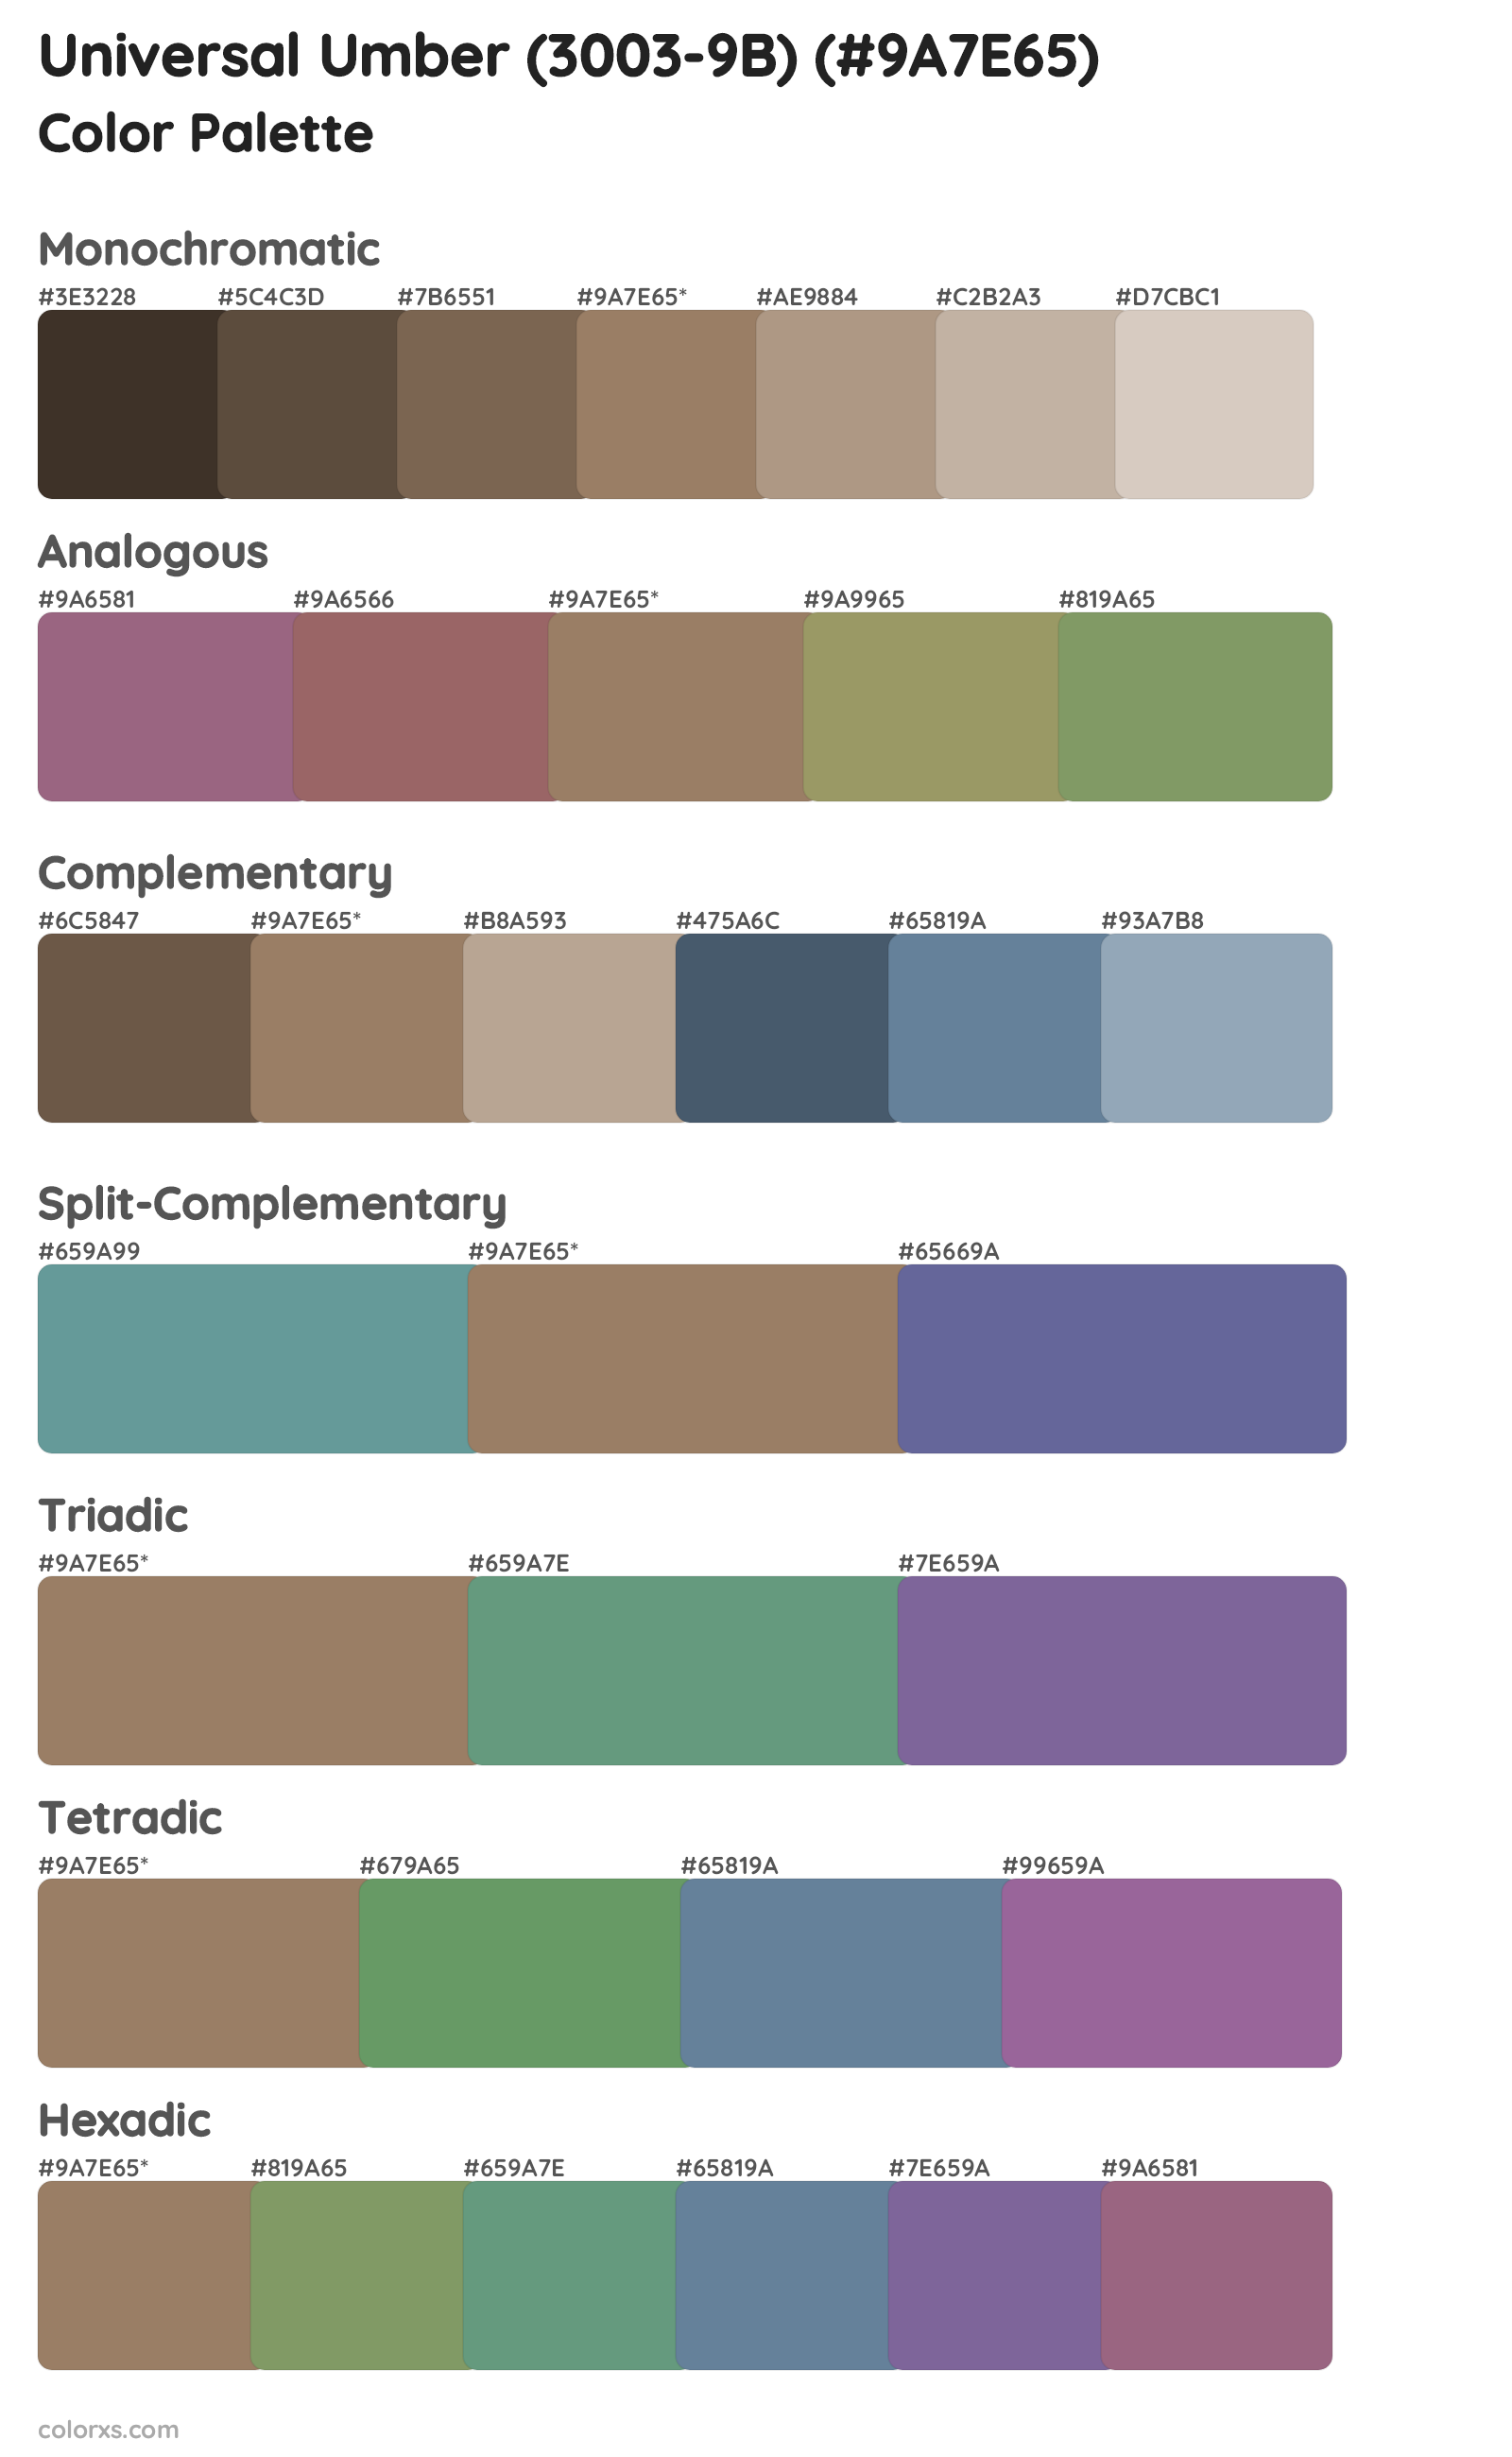 Universal Umber (3003-9B) Color Scheme Palettes